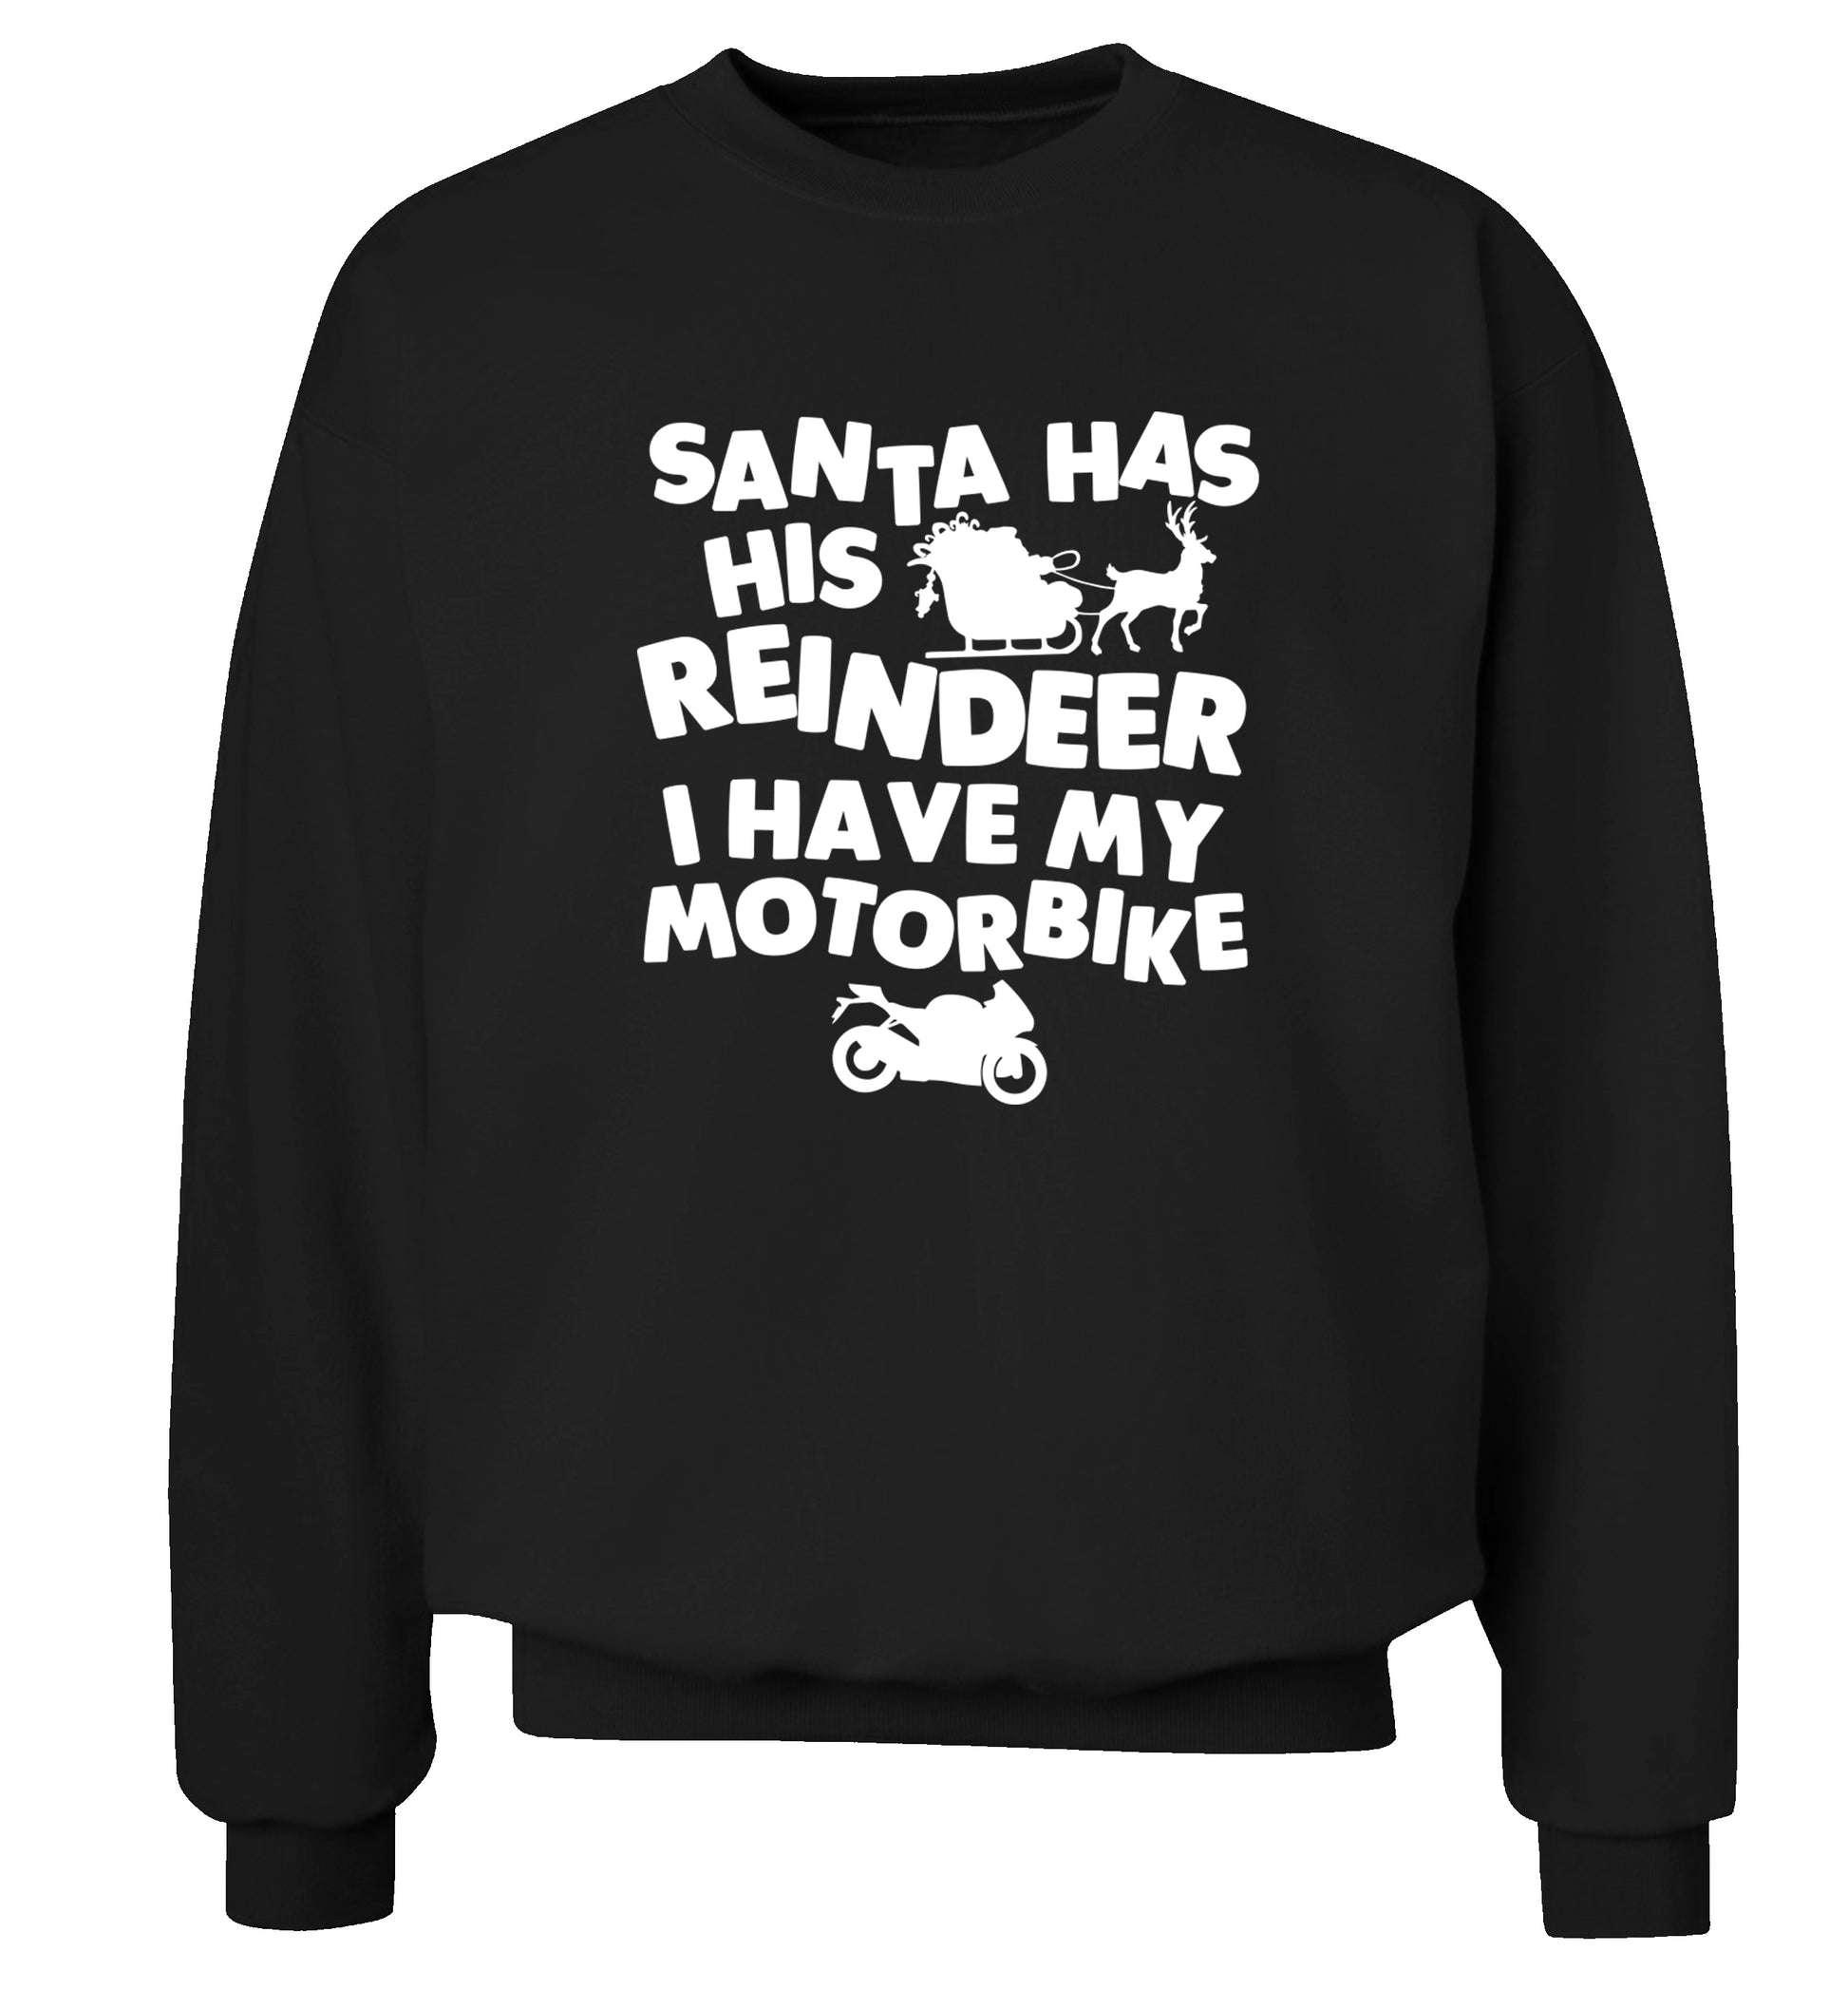 Santa has his reindeer I have my motorbike Adult's unisex black Sweater 2XL